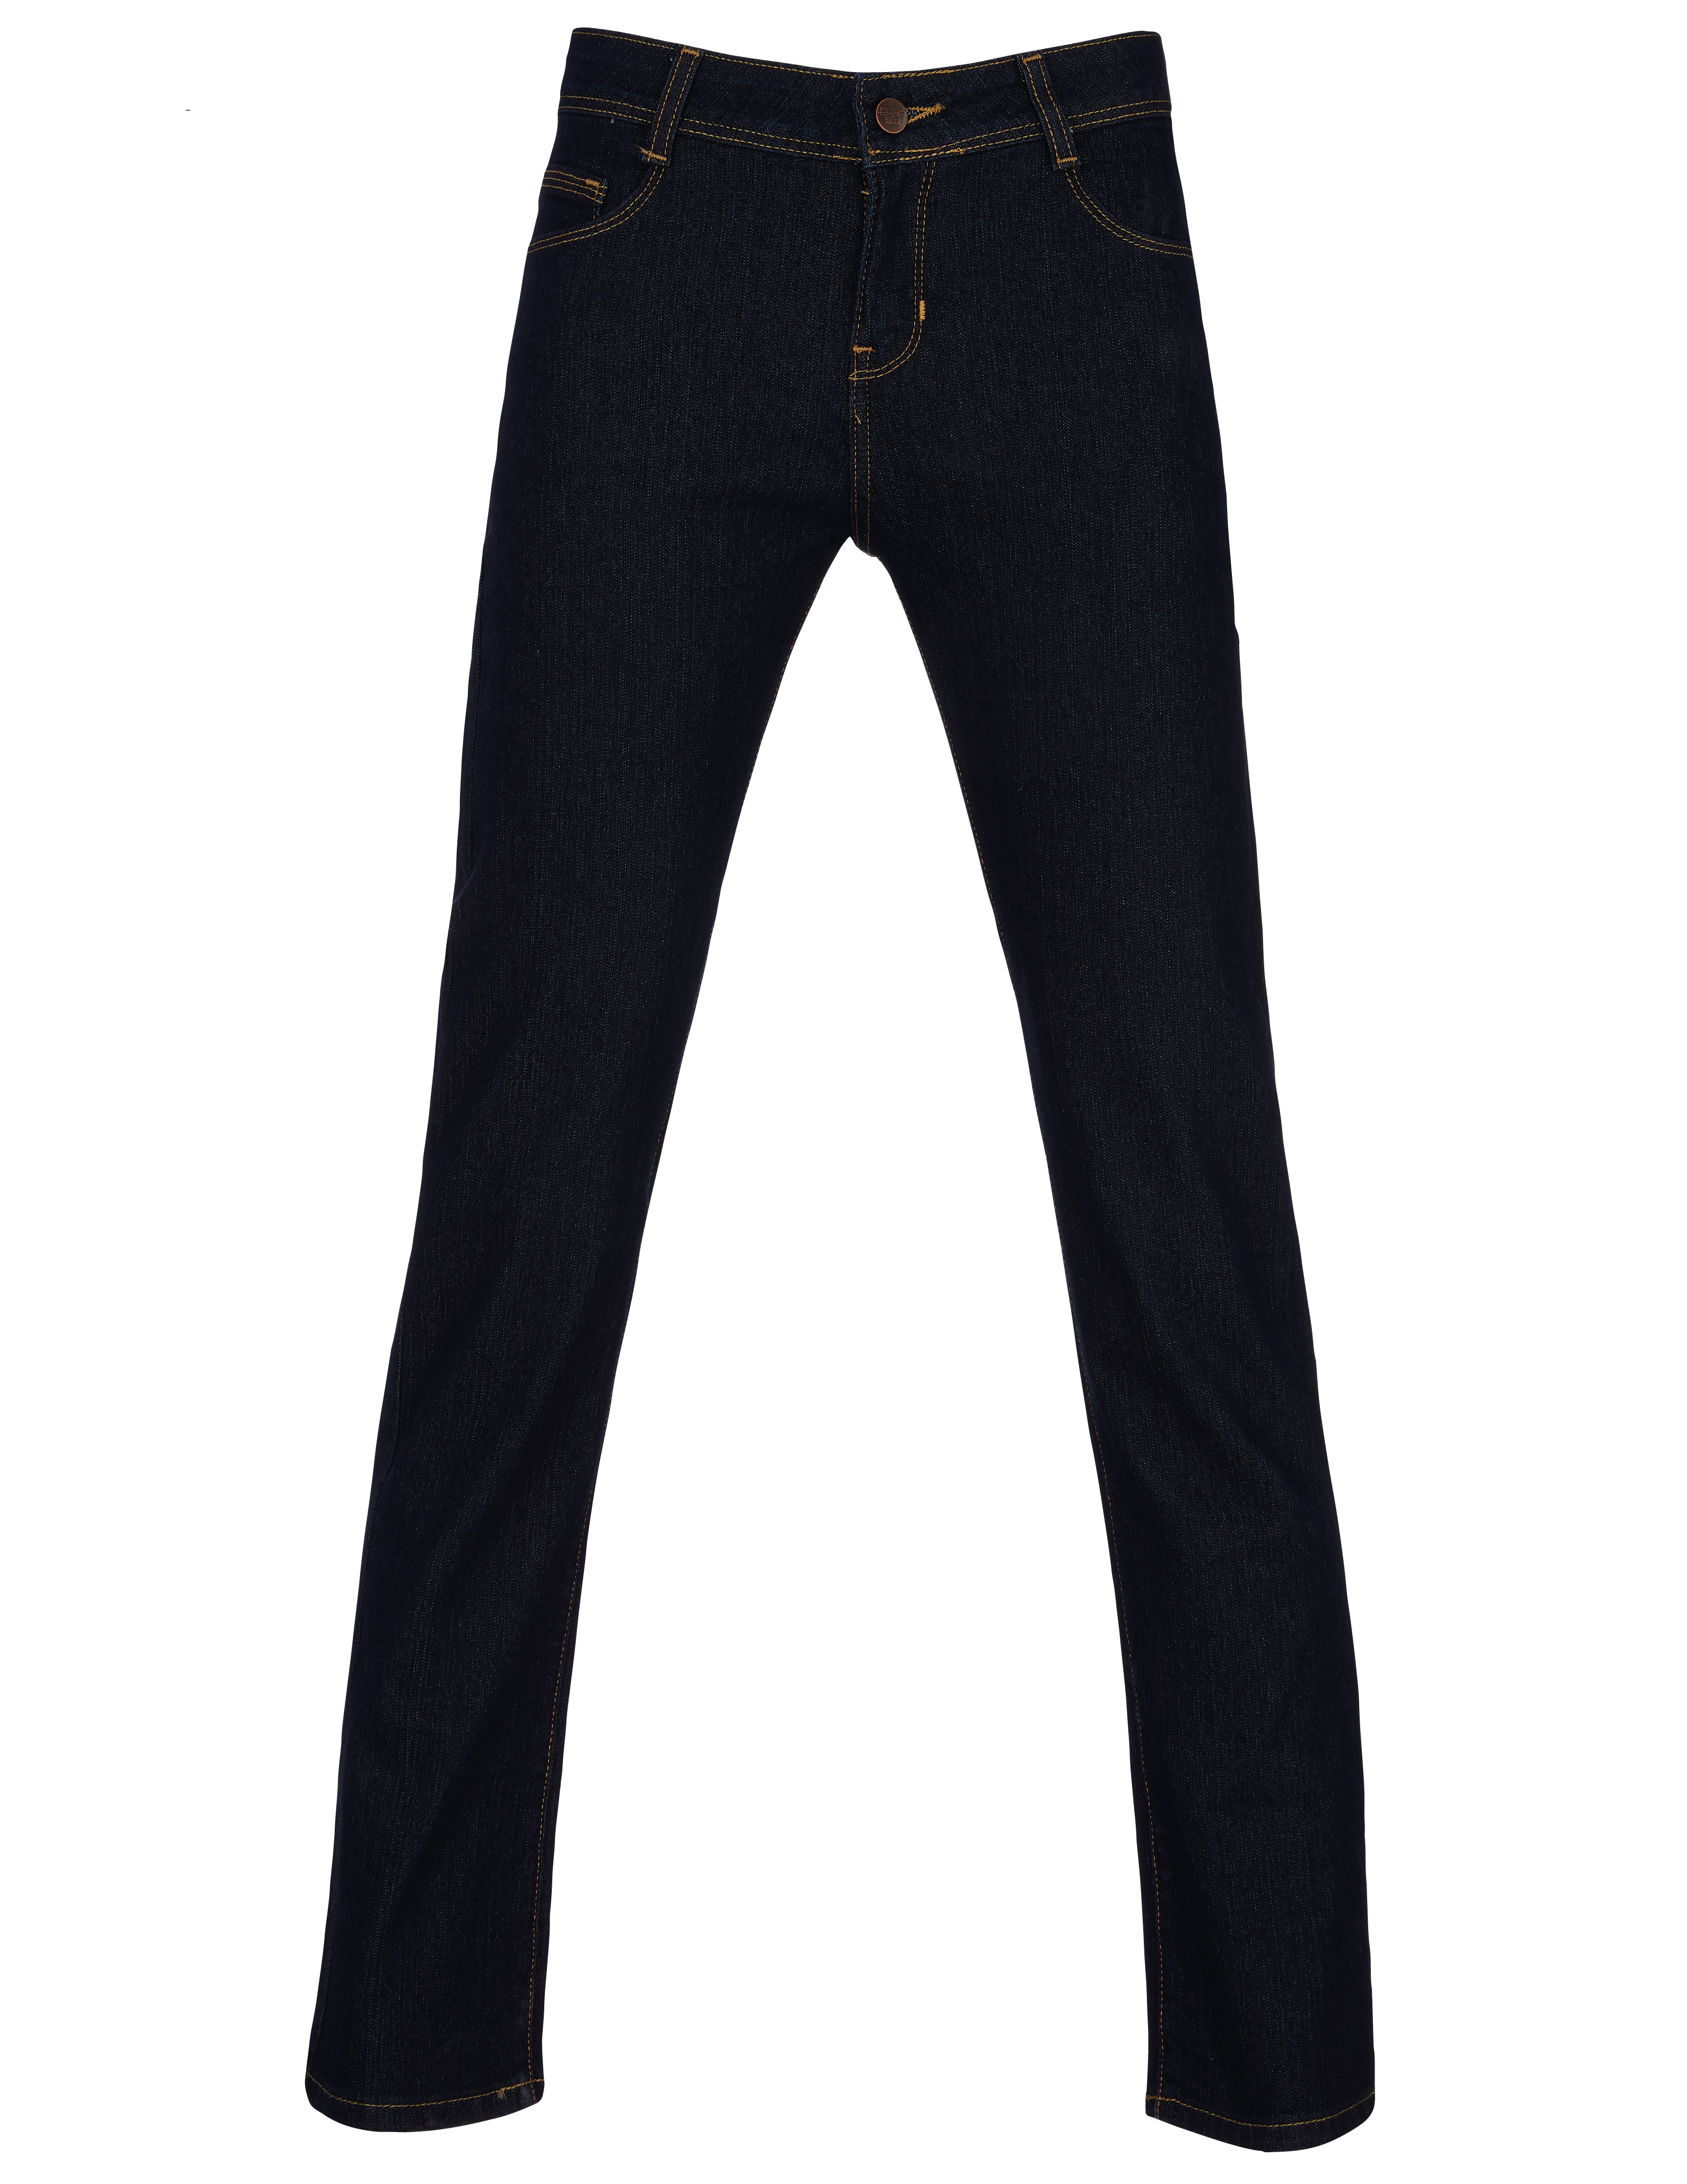 Pantalon de Mezclilla para Dama · 100% Algodón · Color Indigo